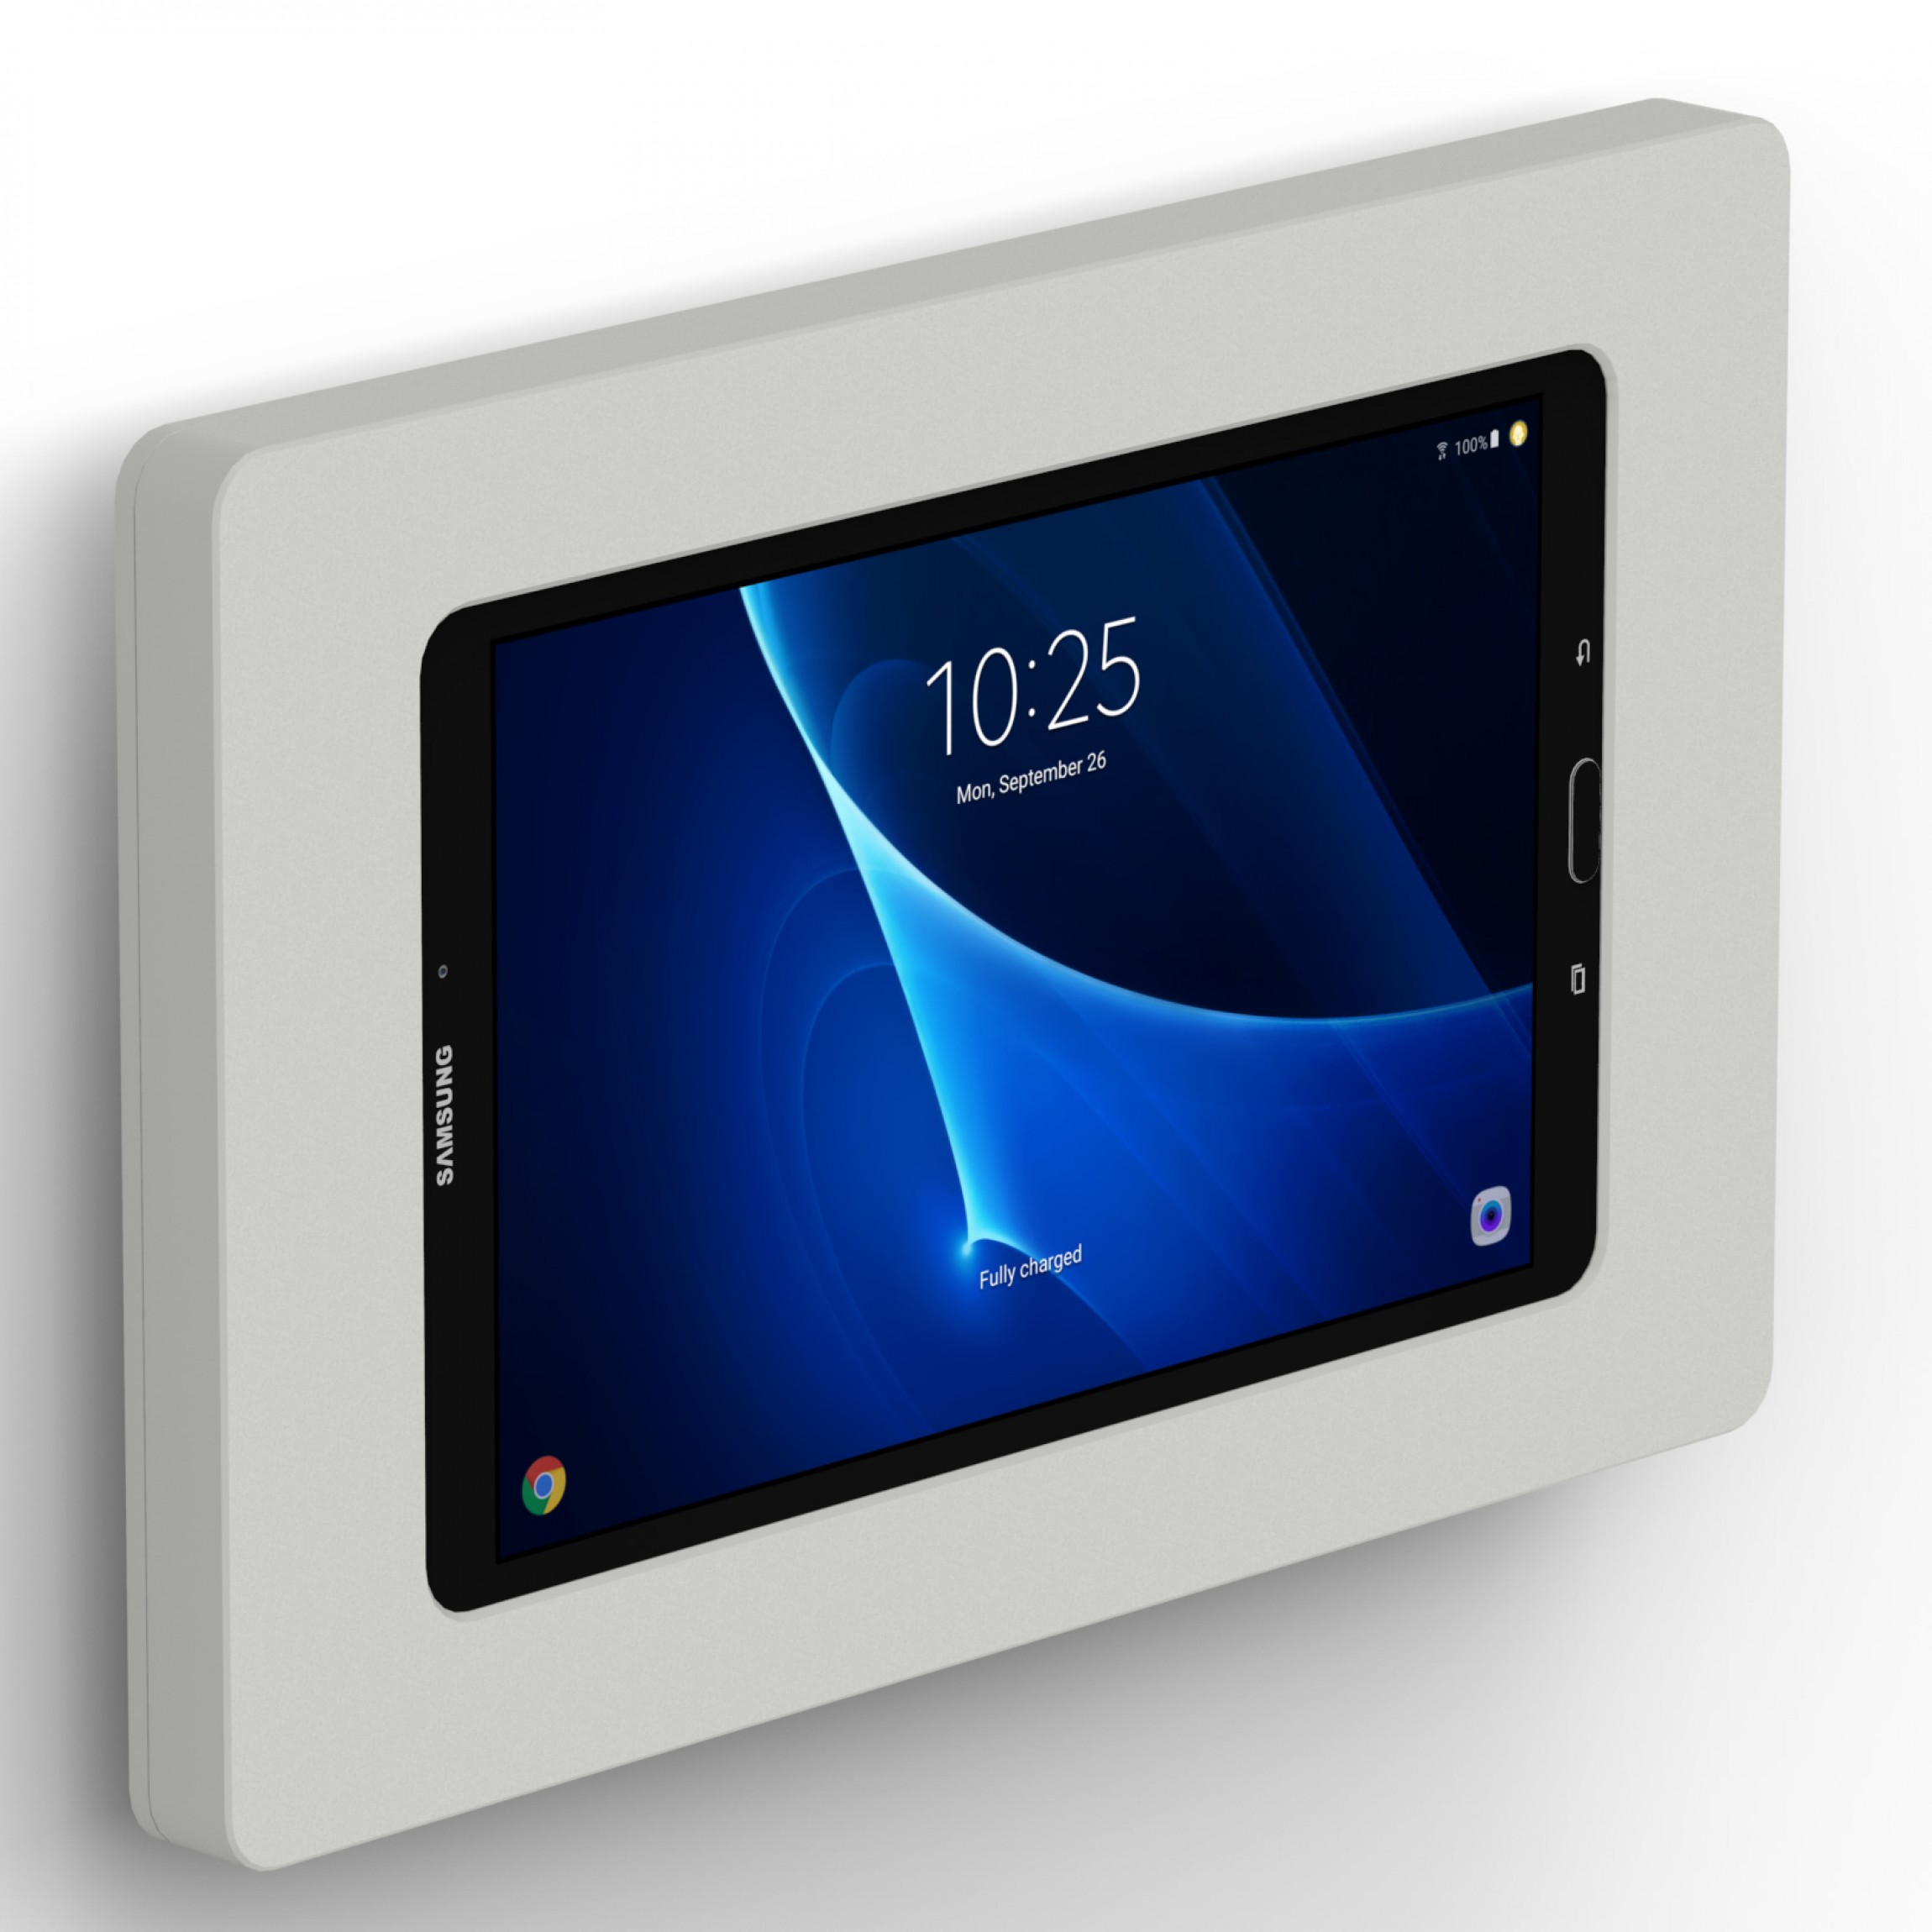 Fietstaxi Spreekwoord propeller VidaMount Fixed Slim Wall Samsung Galaxy Tab A 10.1 Tablet Mount - Light  Grey